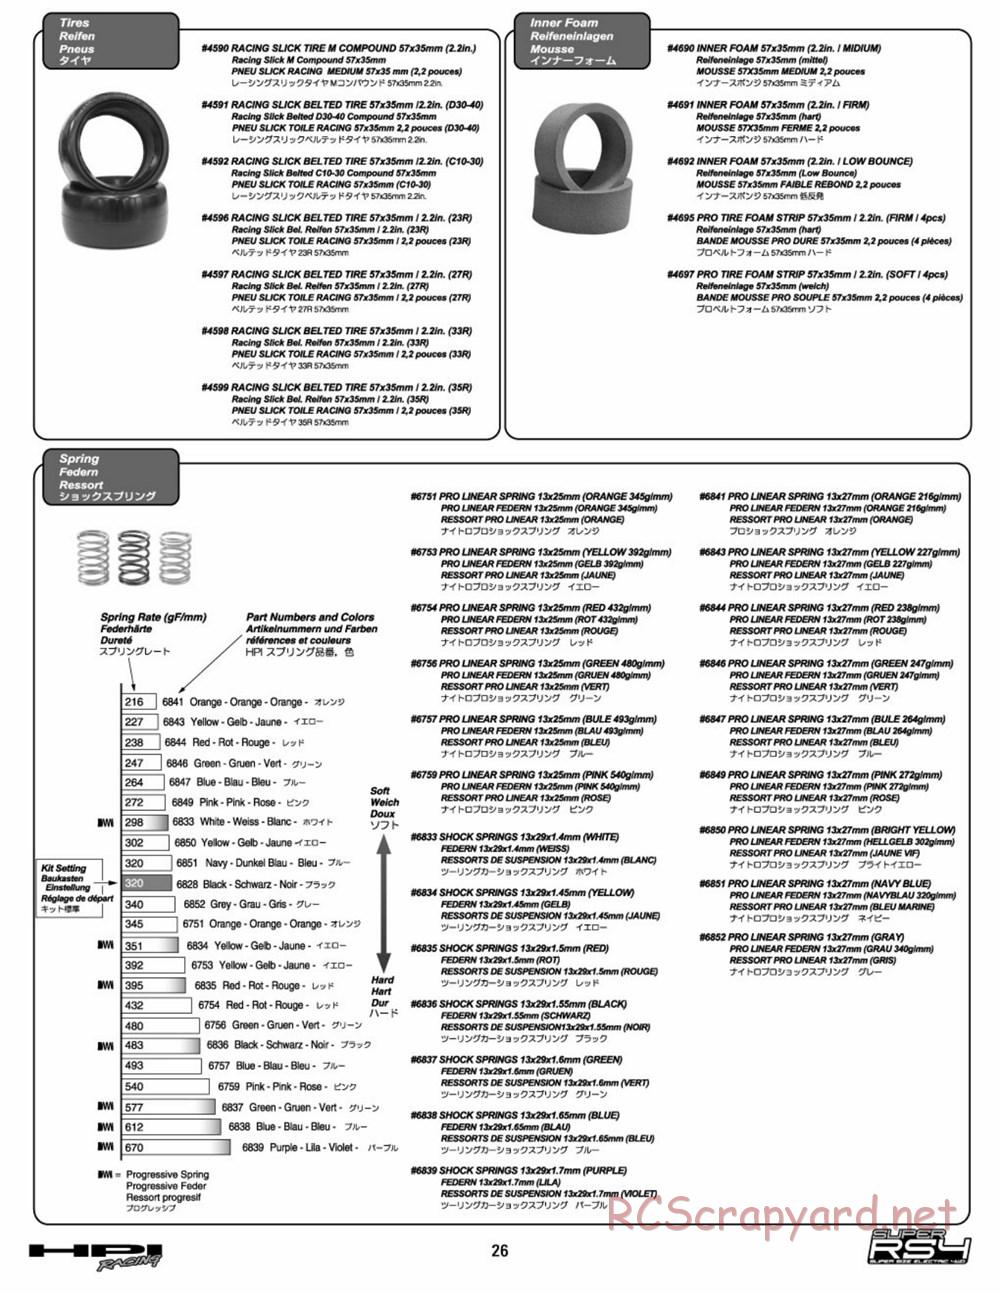 HPI - Super RS4 - Manual - Page 25